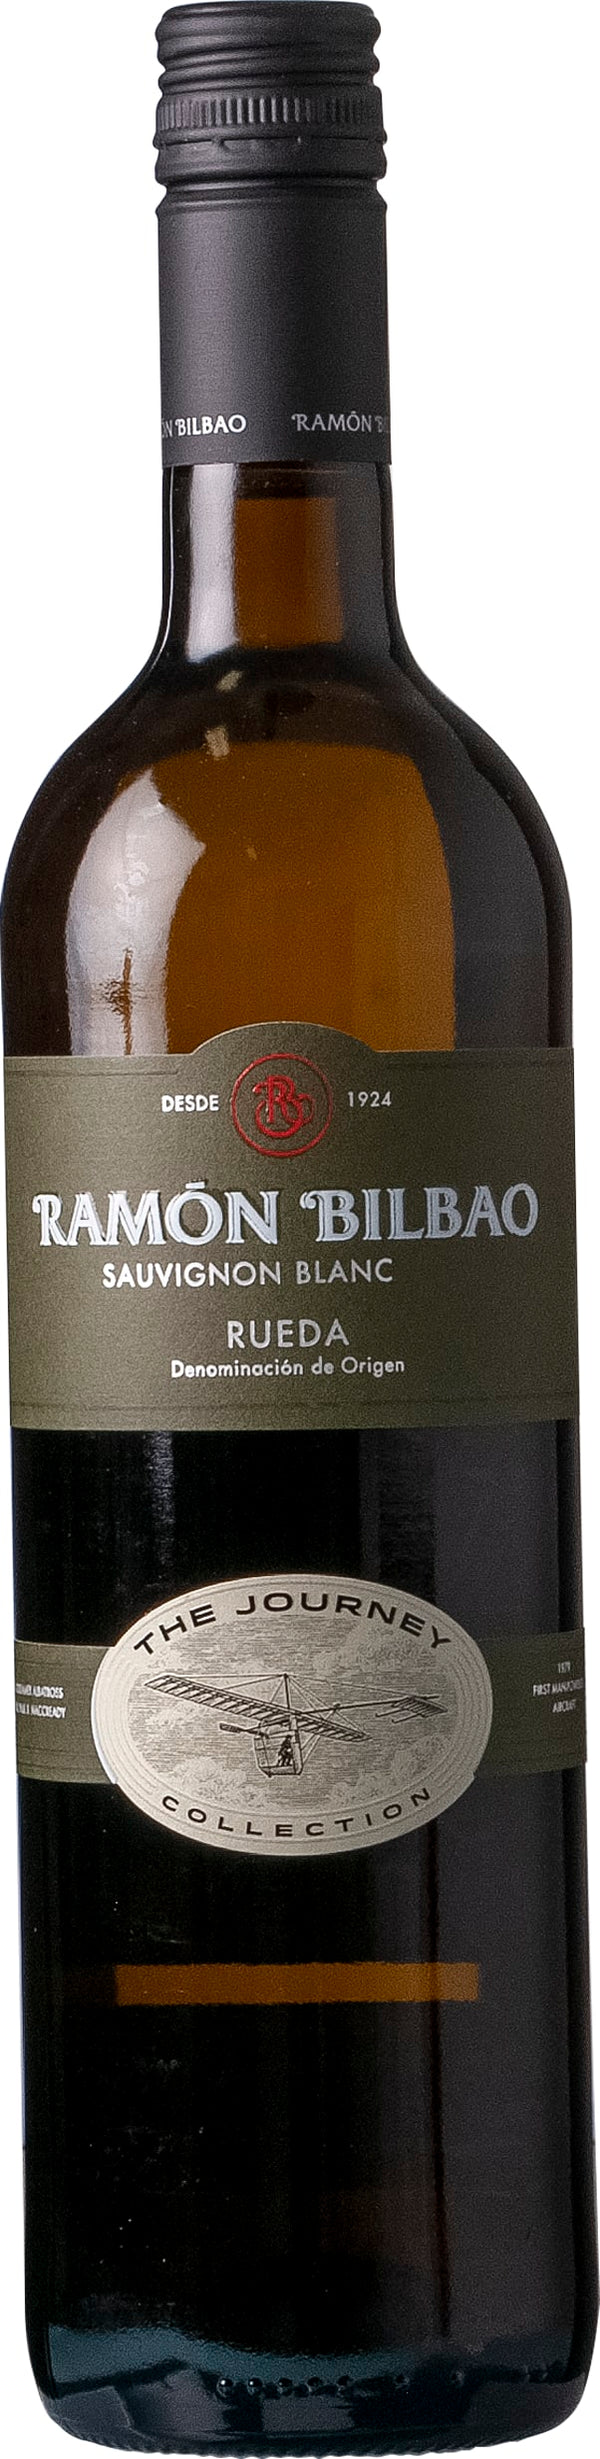 Ramon Bilbao Journey Collection Sauvignon Blanc 2022 6x75cl - Just Wines 